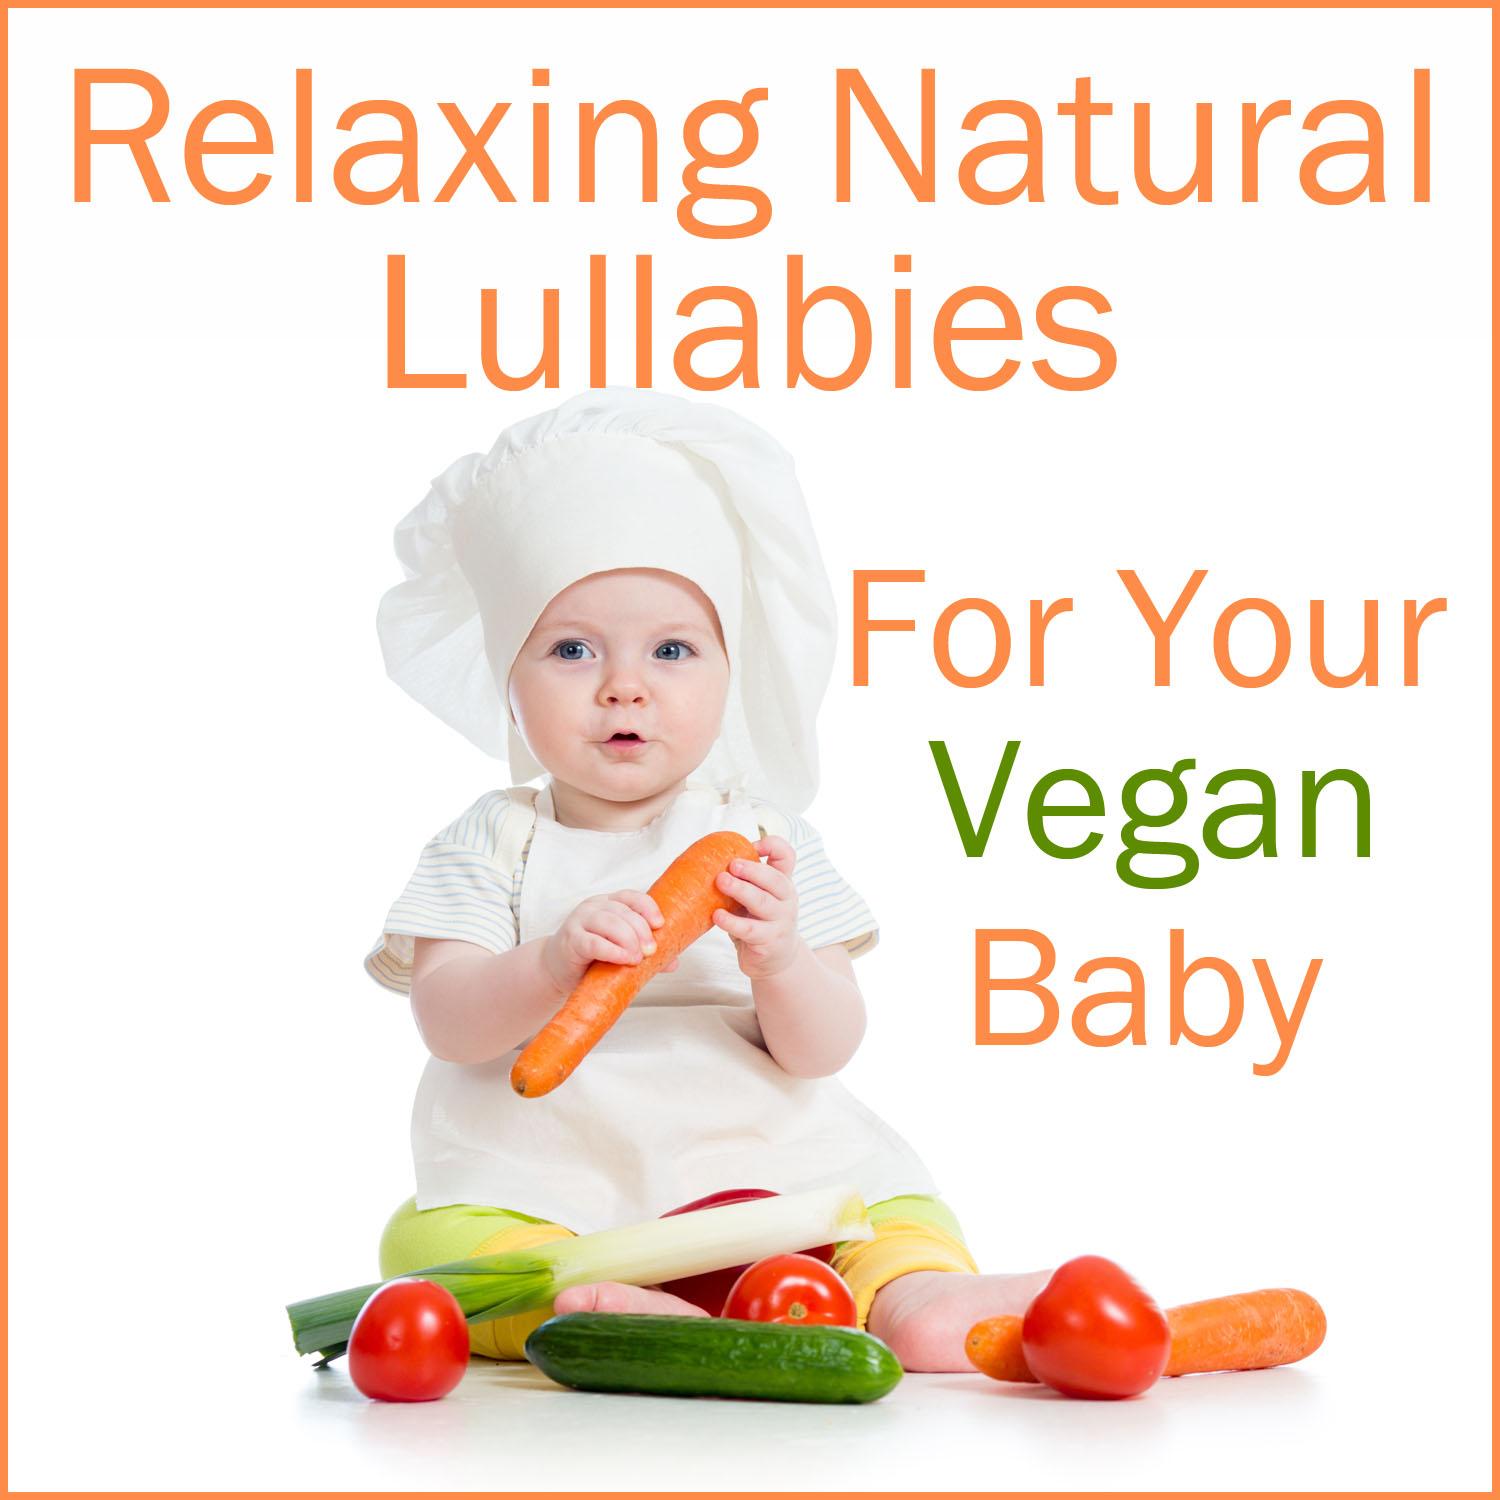 Relaxing Natural Lullabies for Your Vegan Baby